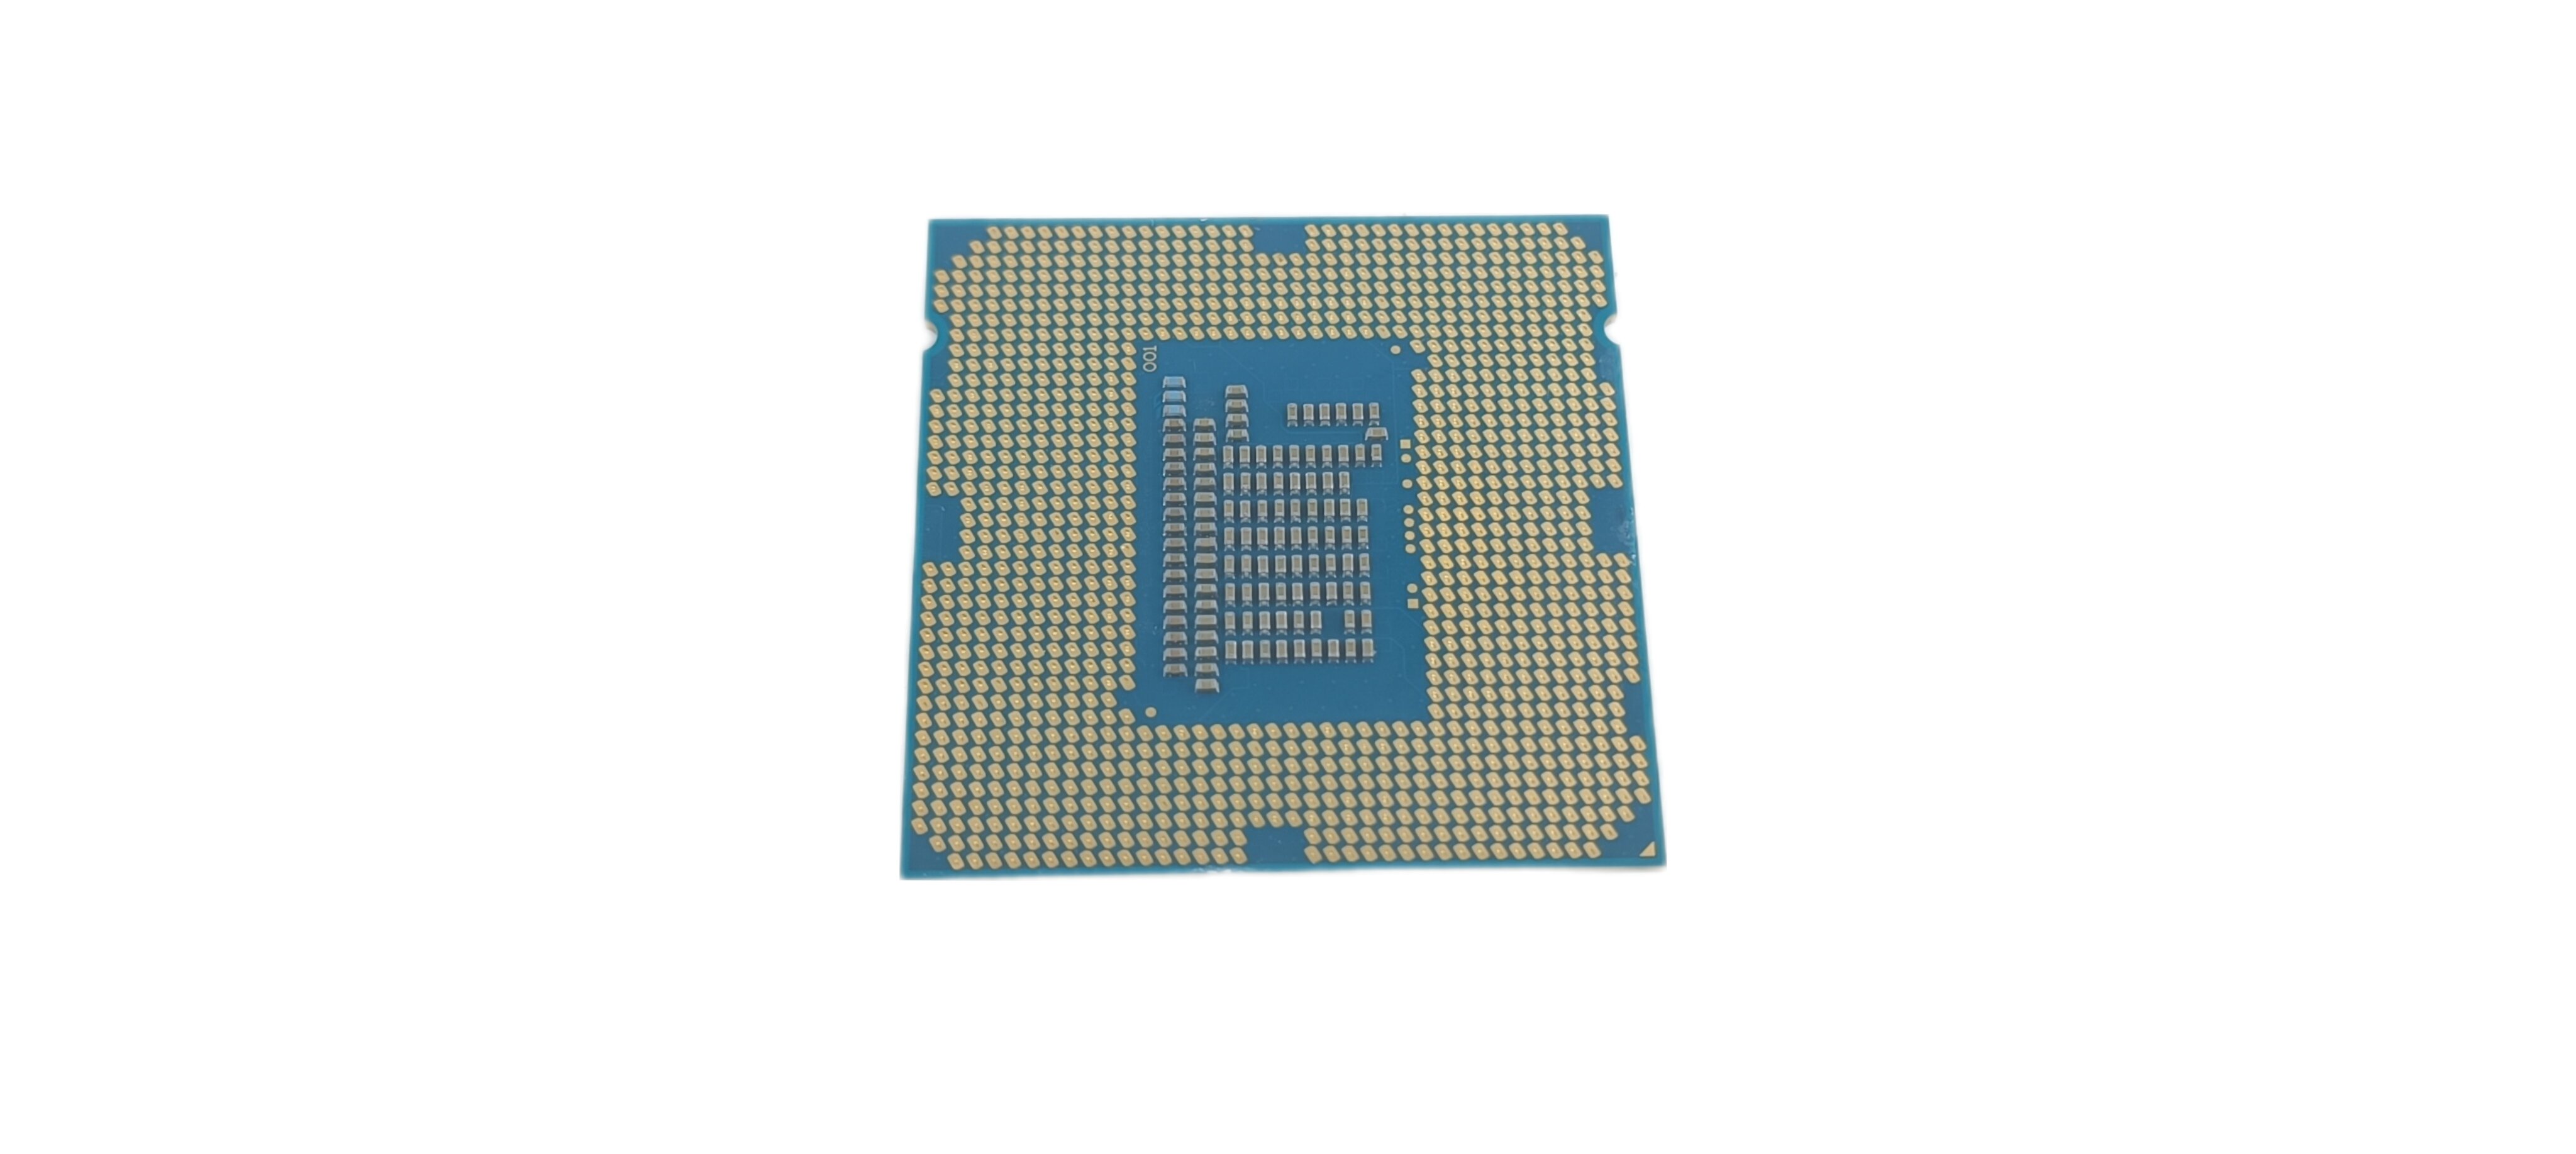 Процессор Socket 1155 Intel Core i3-3240 (3M Cache 3.40 GHz 2 core) [SR0RH]